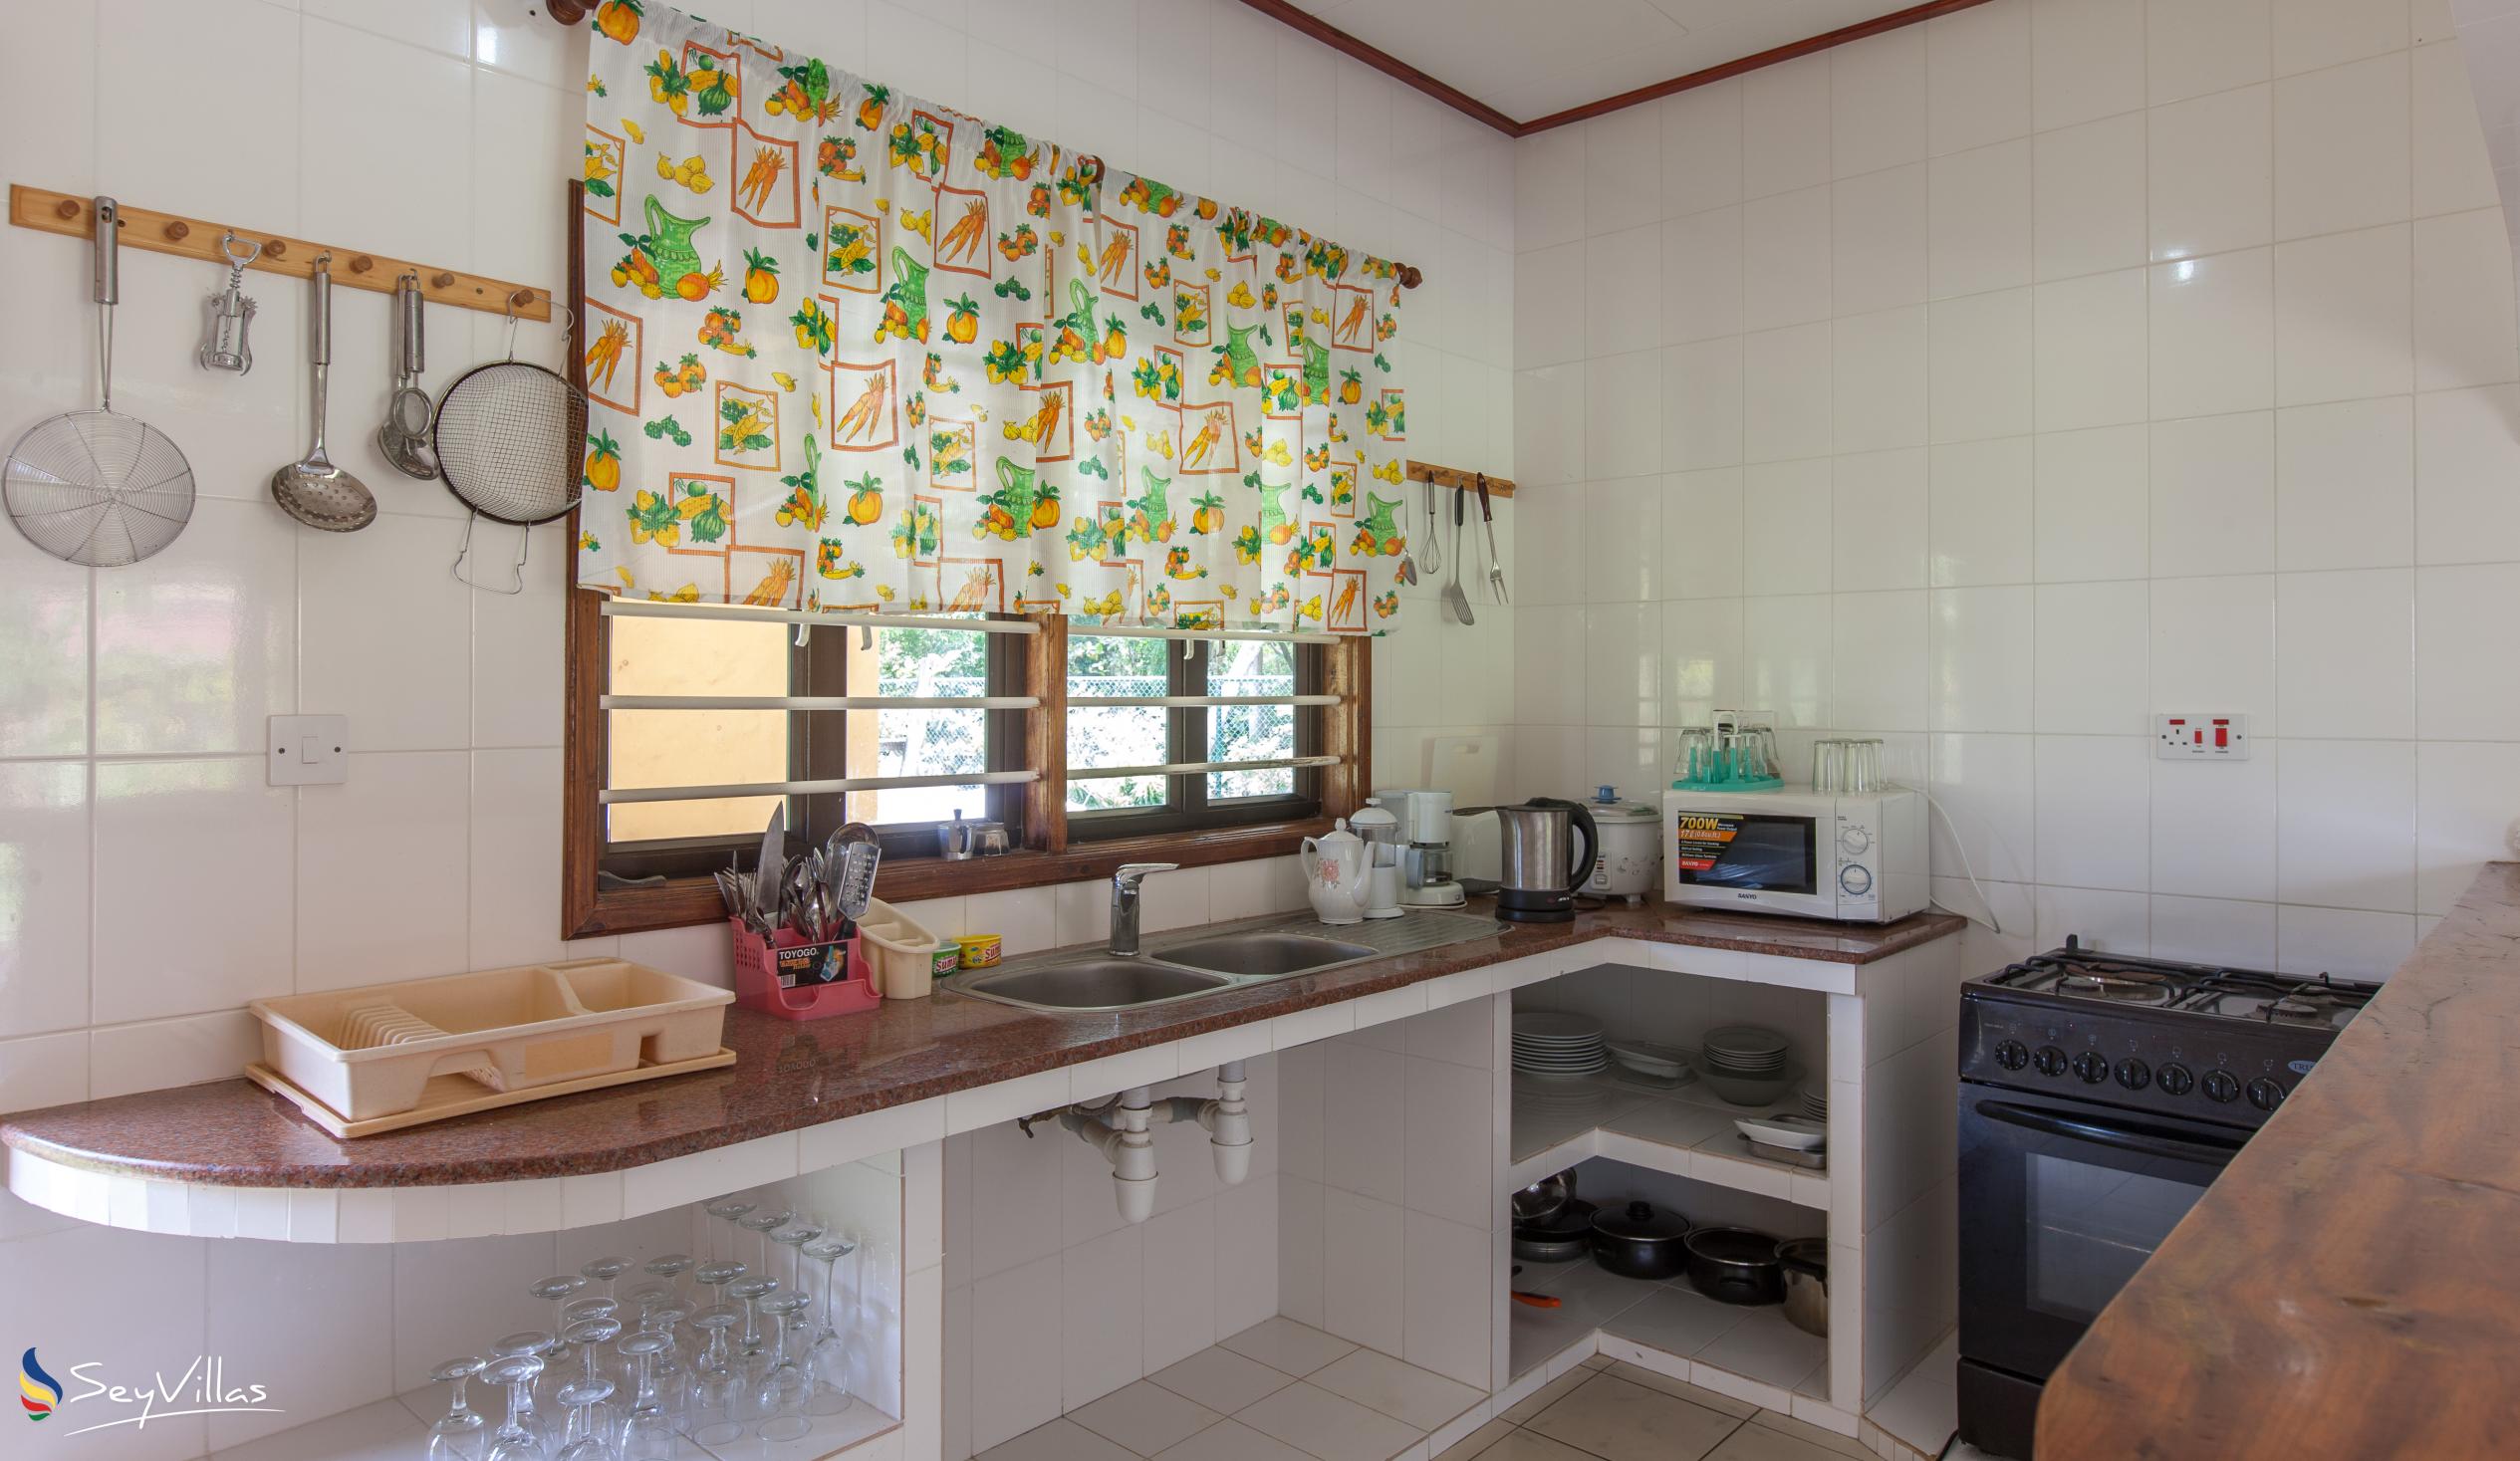 Foto 19: Zerof Self Catering  Apartments - Appartement à 1 chambre - La Digue (Seychelles)